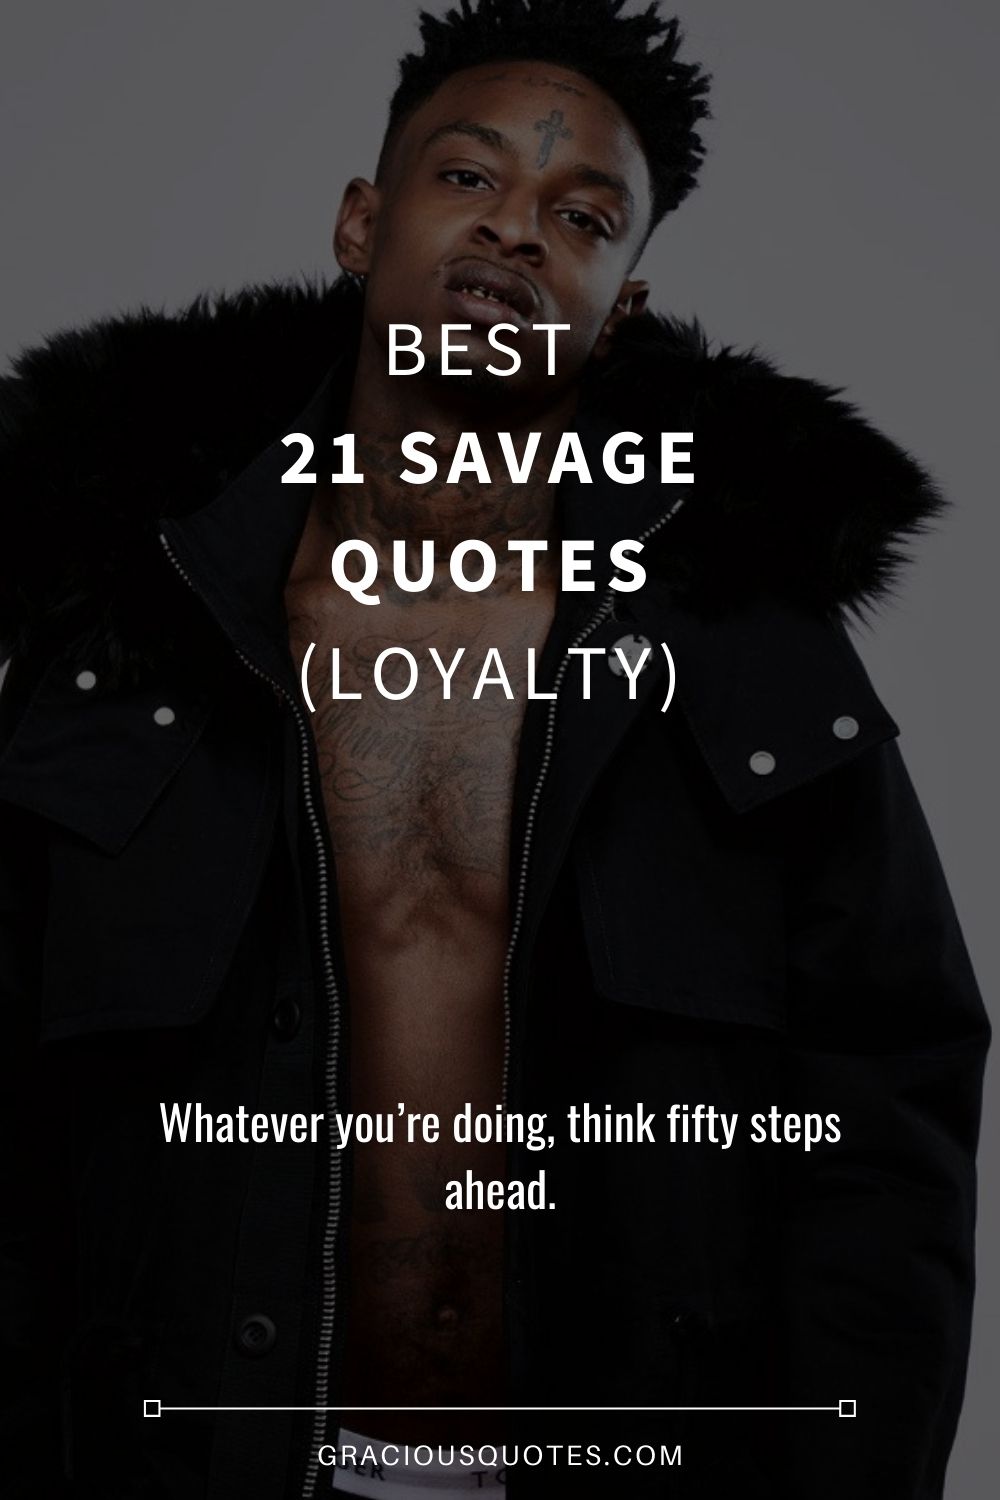 10 Best 21 Savage Quotes